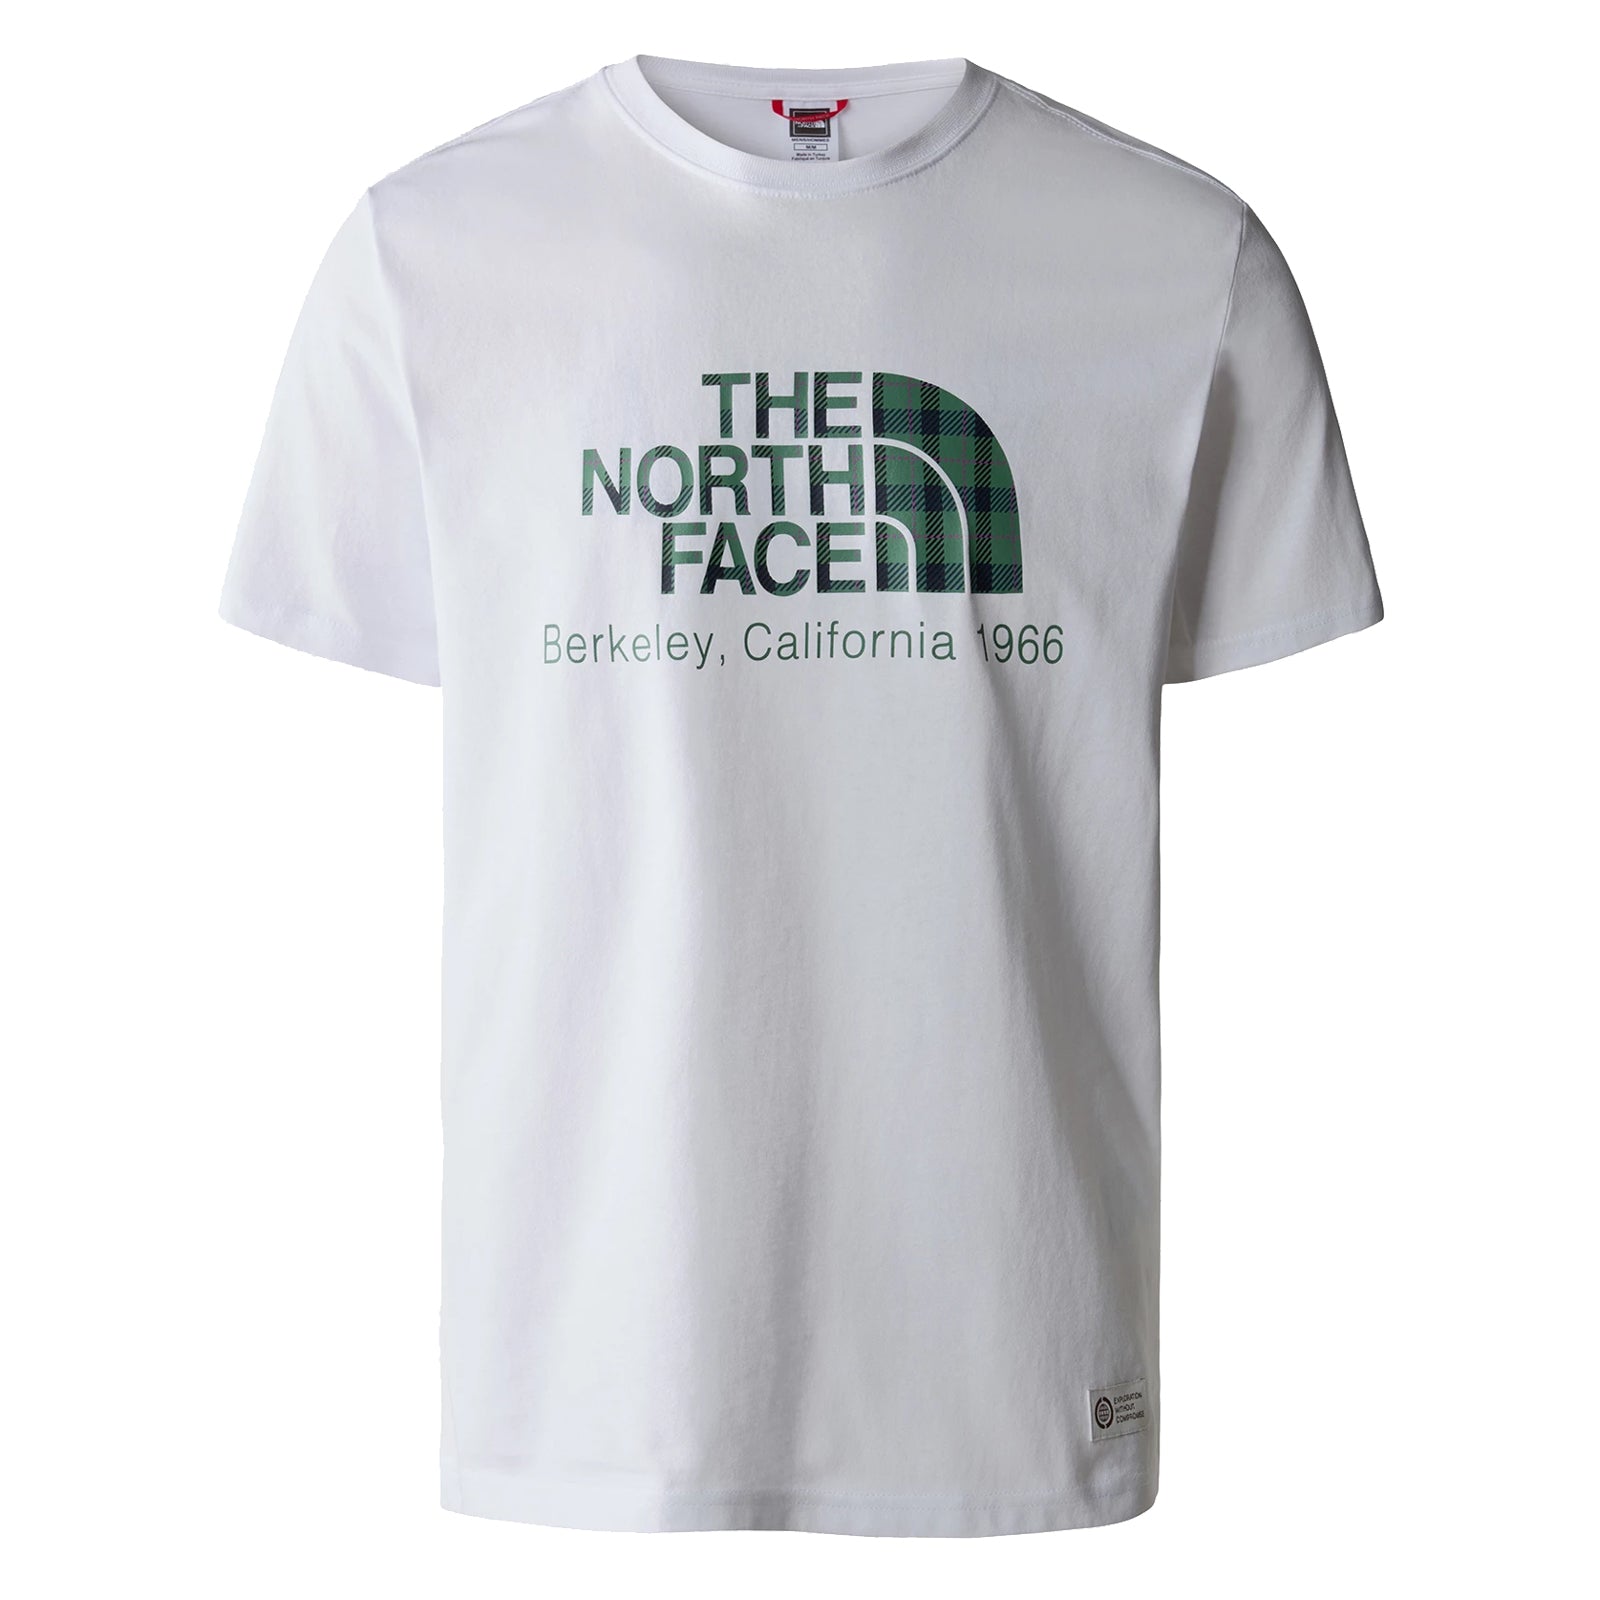 Camiseta The North Face Berkeley California TNF White/Deep Grass